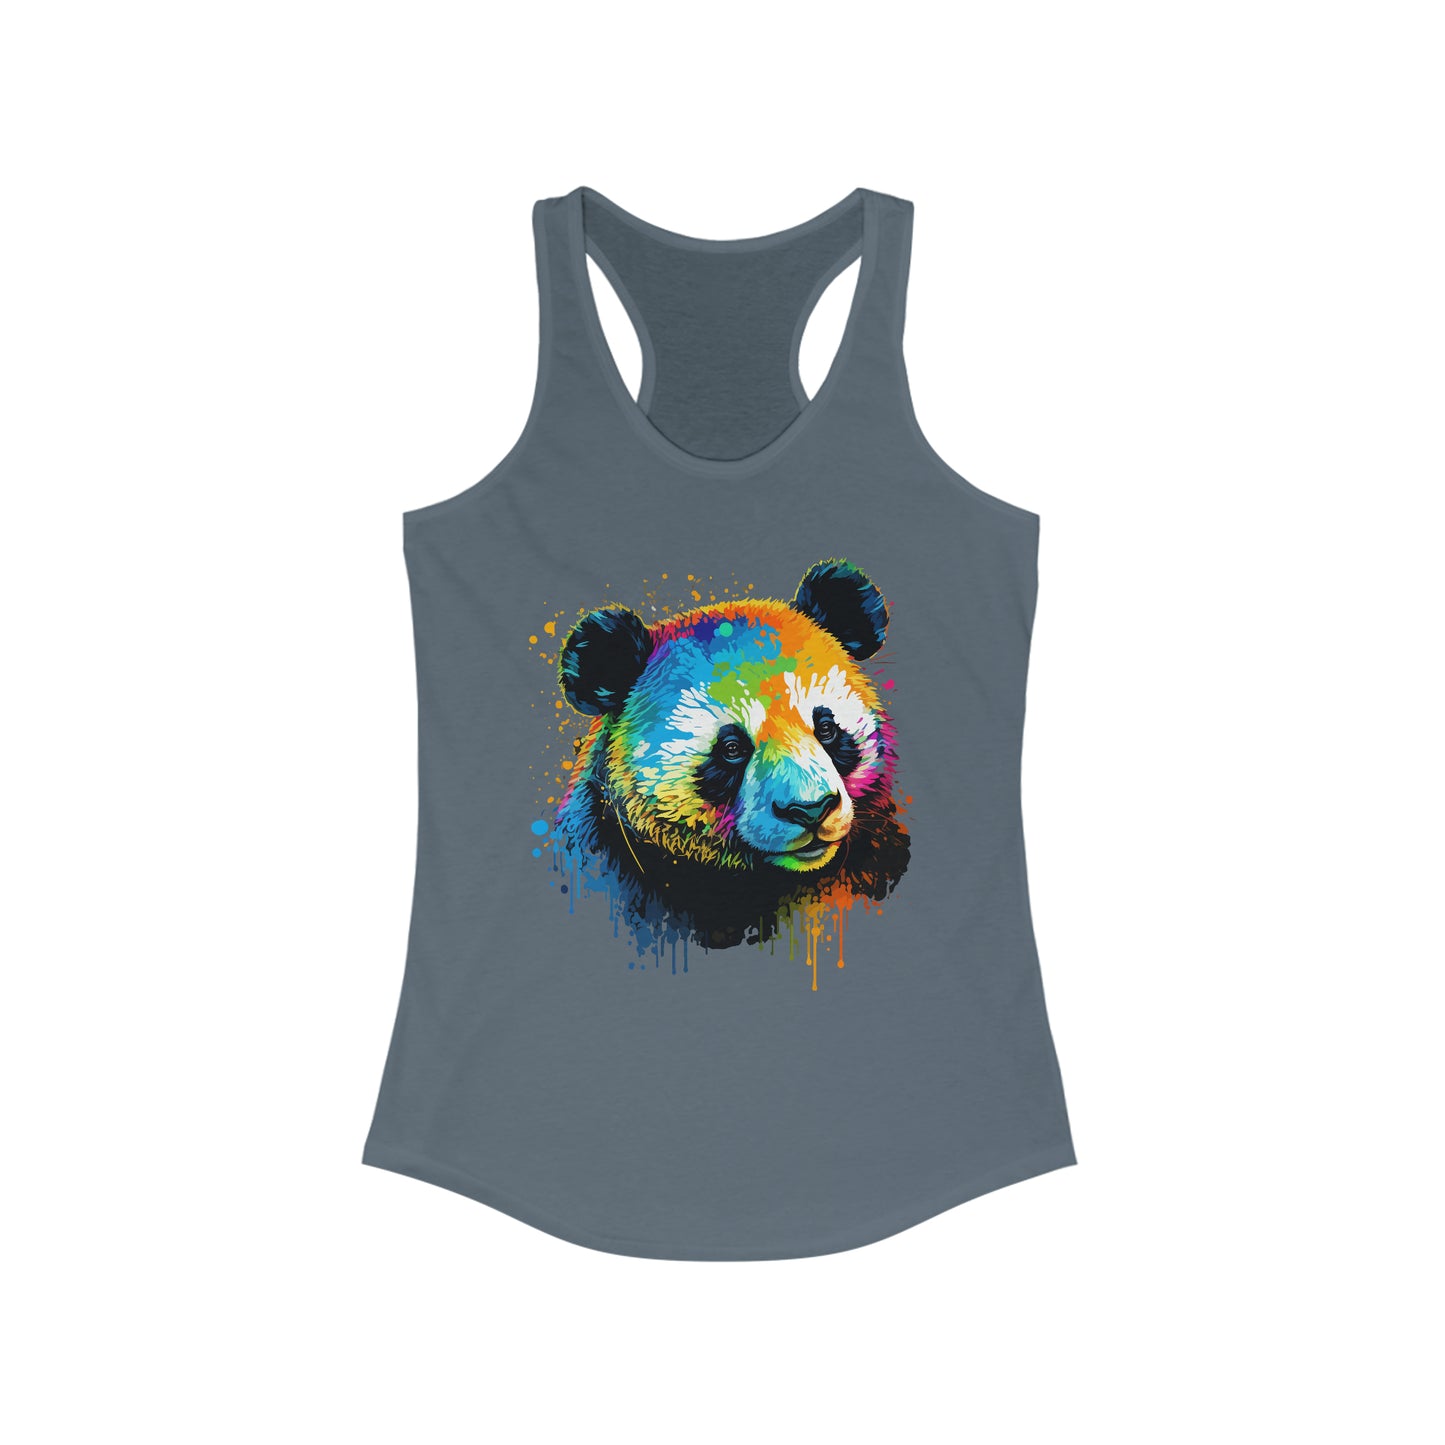 Panda Tank Top With Colorful Panda Shirt For Zoo Animal Tank Top With Pop Art Panda Gift Idea